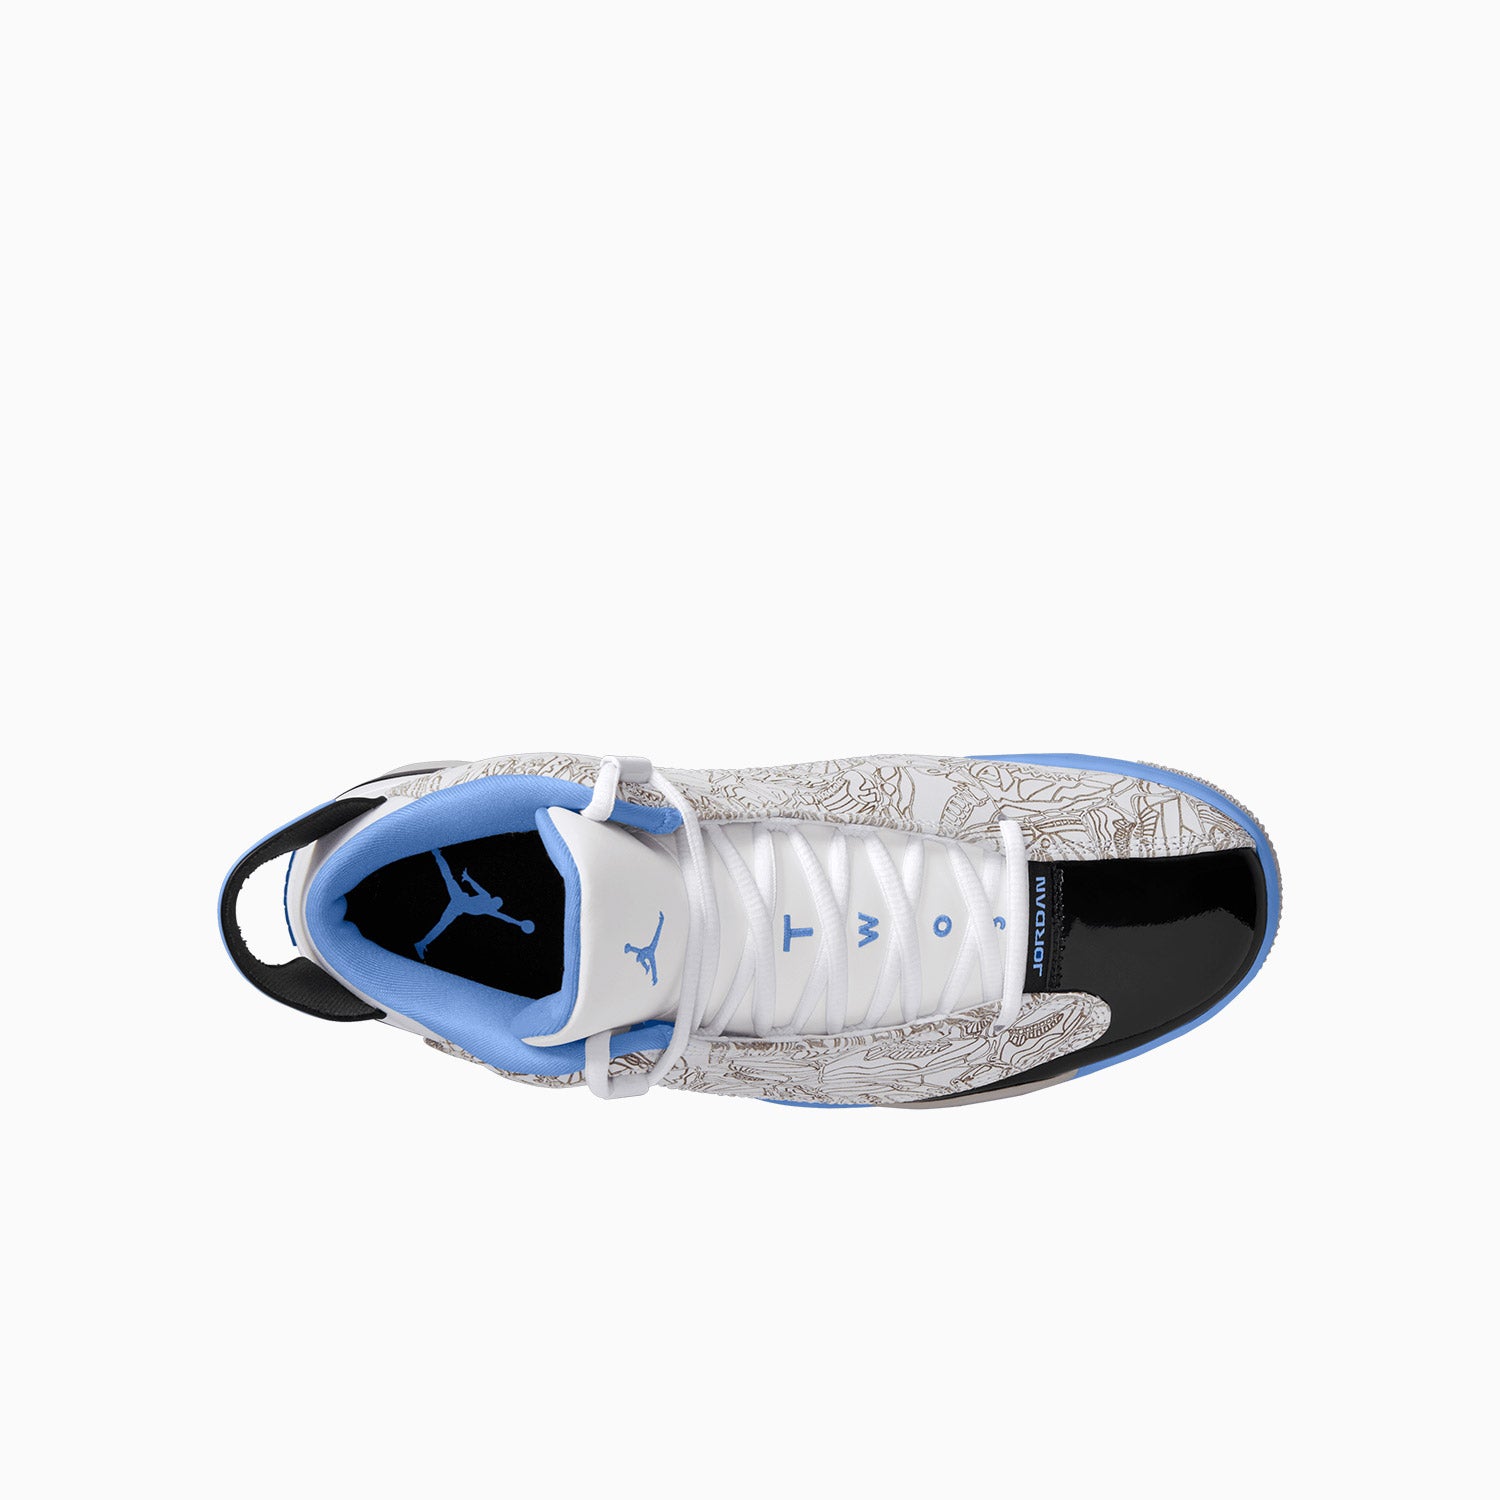 jordan-mens-air-jordan-dub-zero-legend-blue-shoes-311046-114